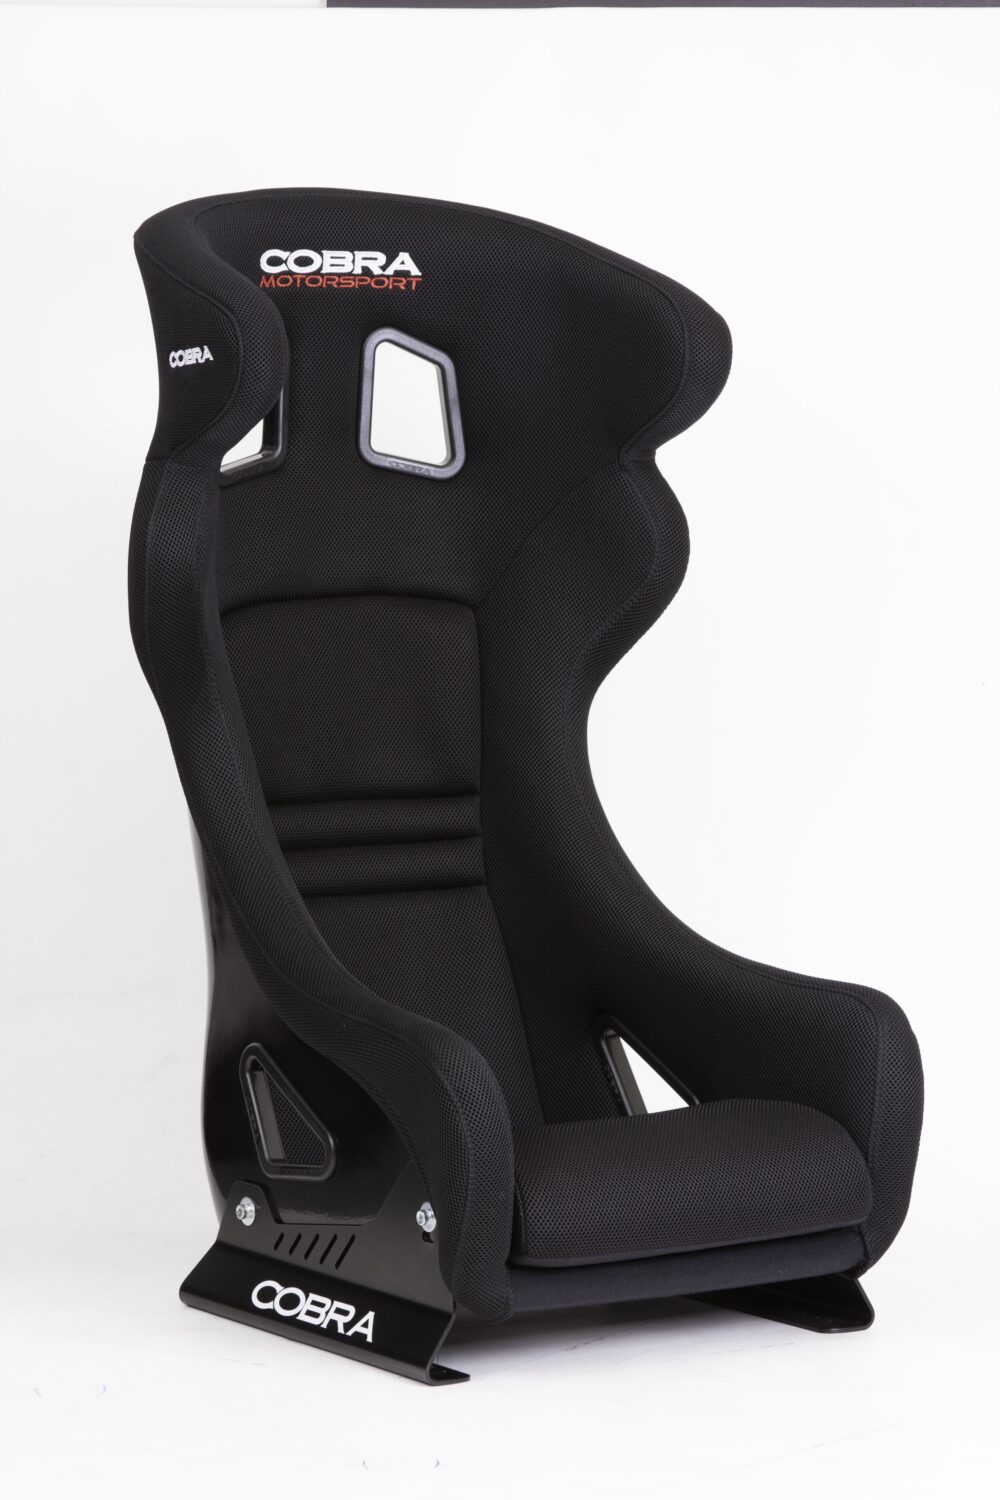 Cobra Sebring GT